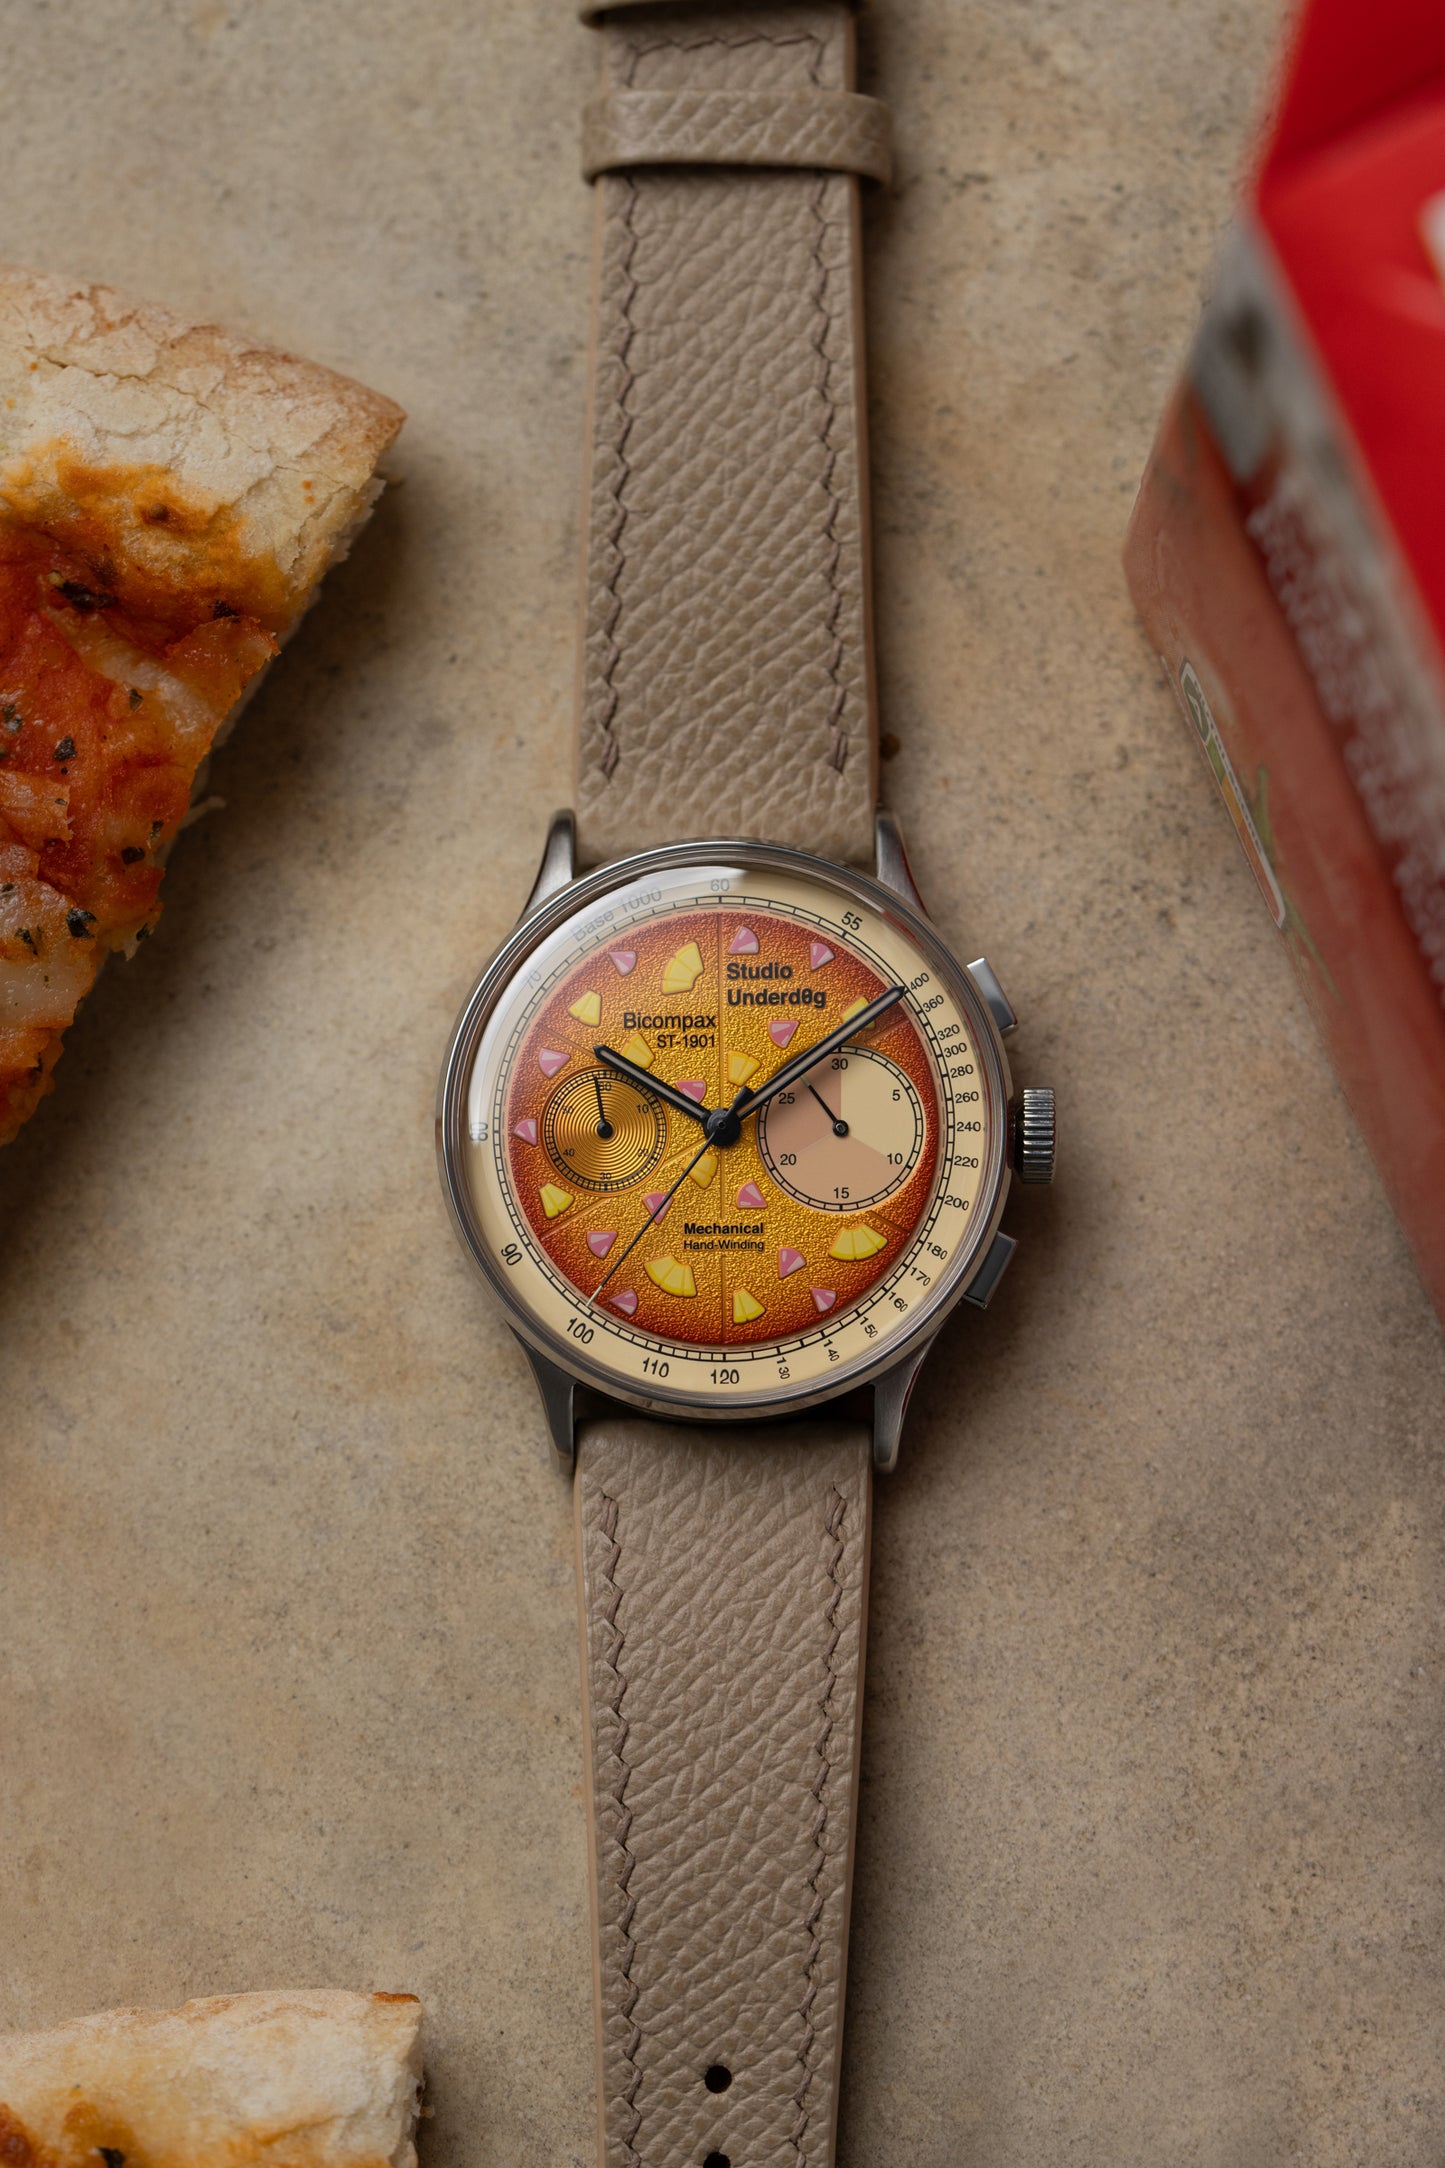 Studio Underd0g x Time+Tide Hand Delivered Hawaiian Pizza